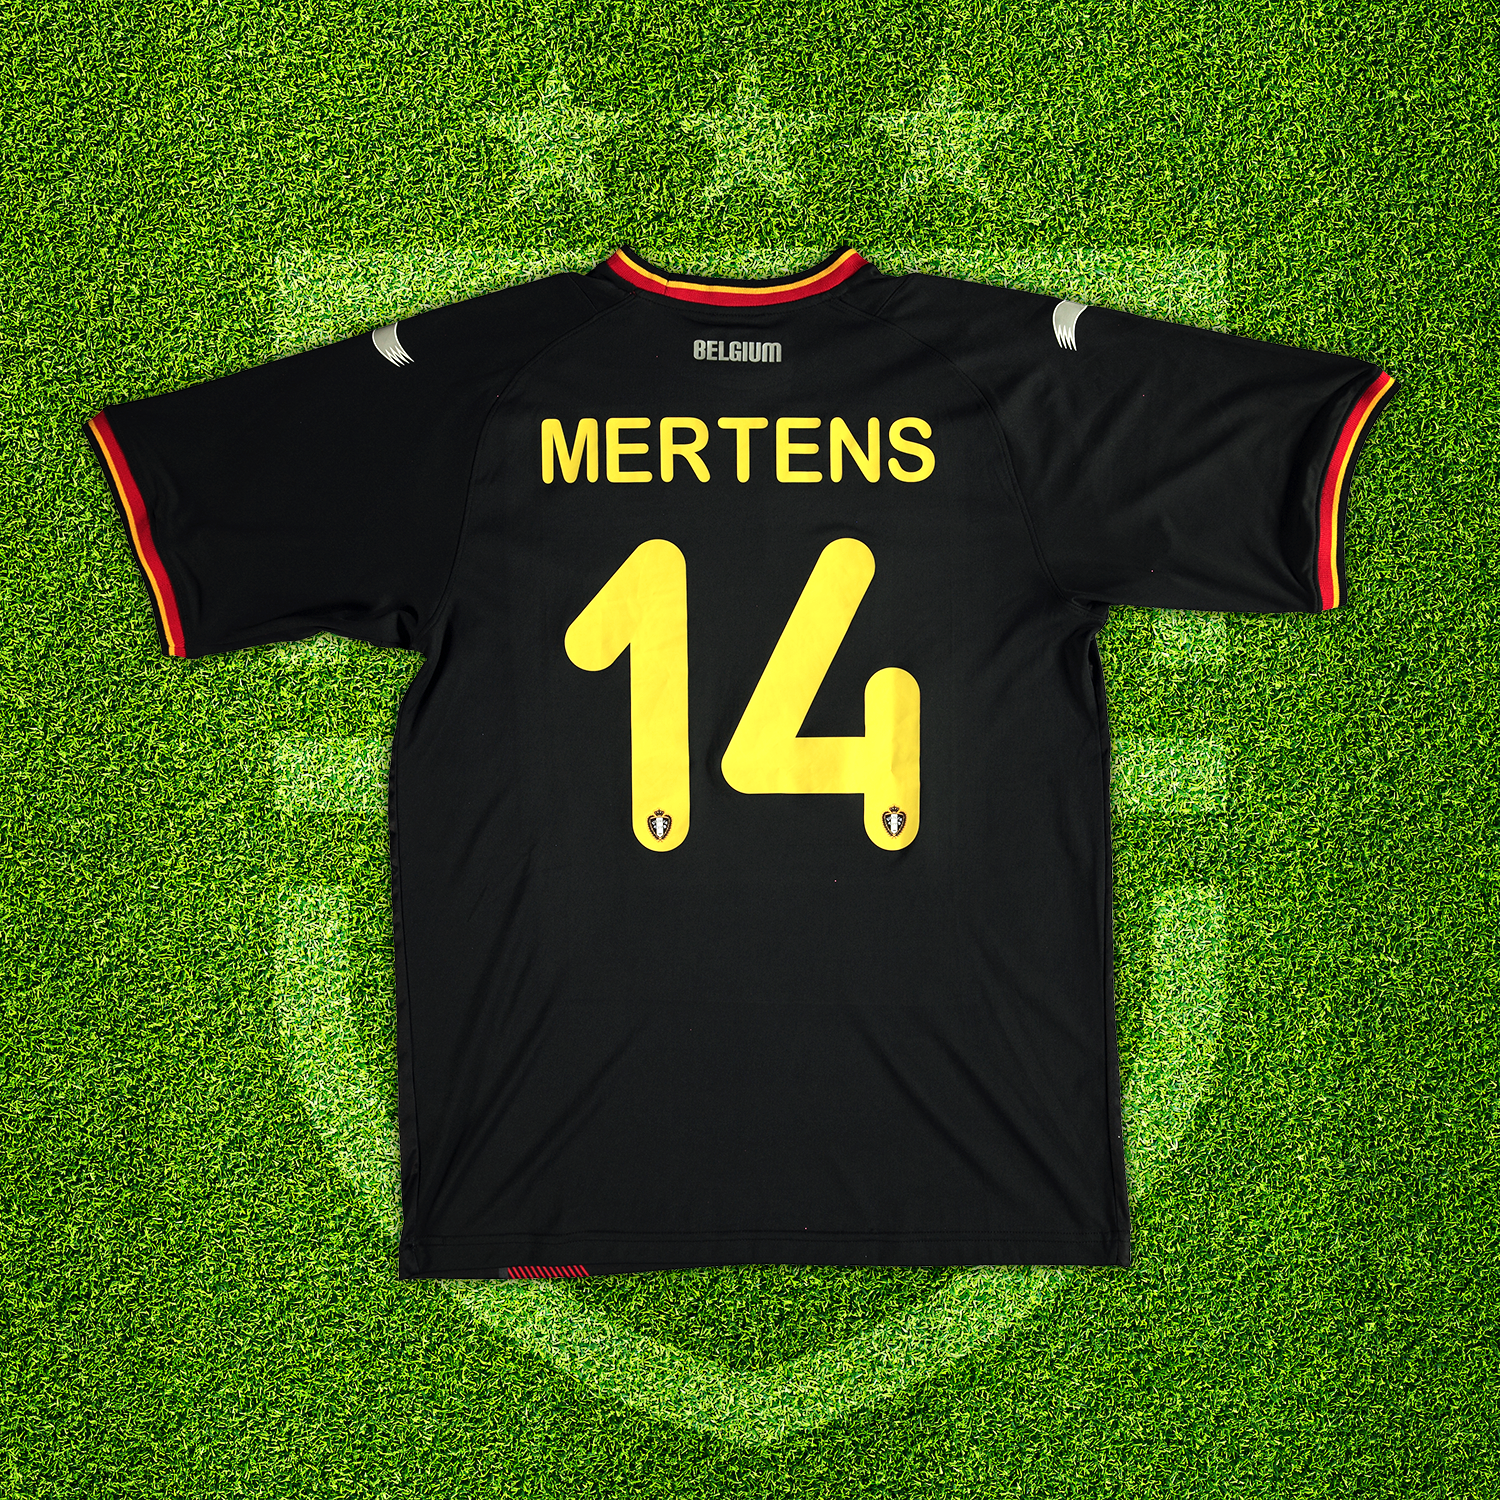 2014 Belgian Red Devils (Belgium) Away Shirt Mertens (XL)